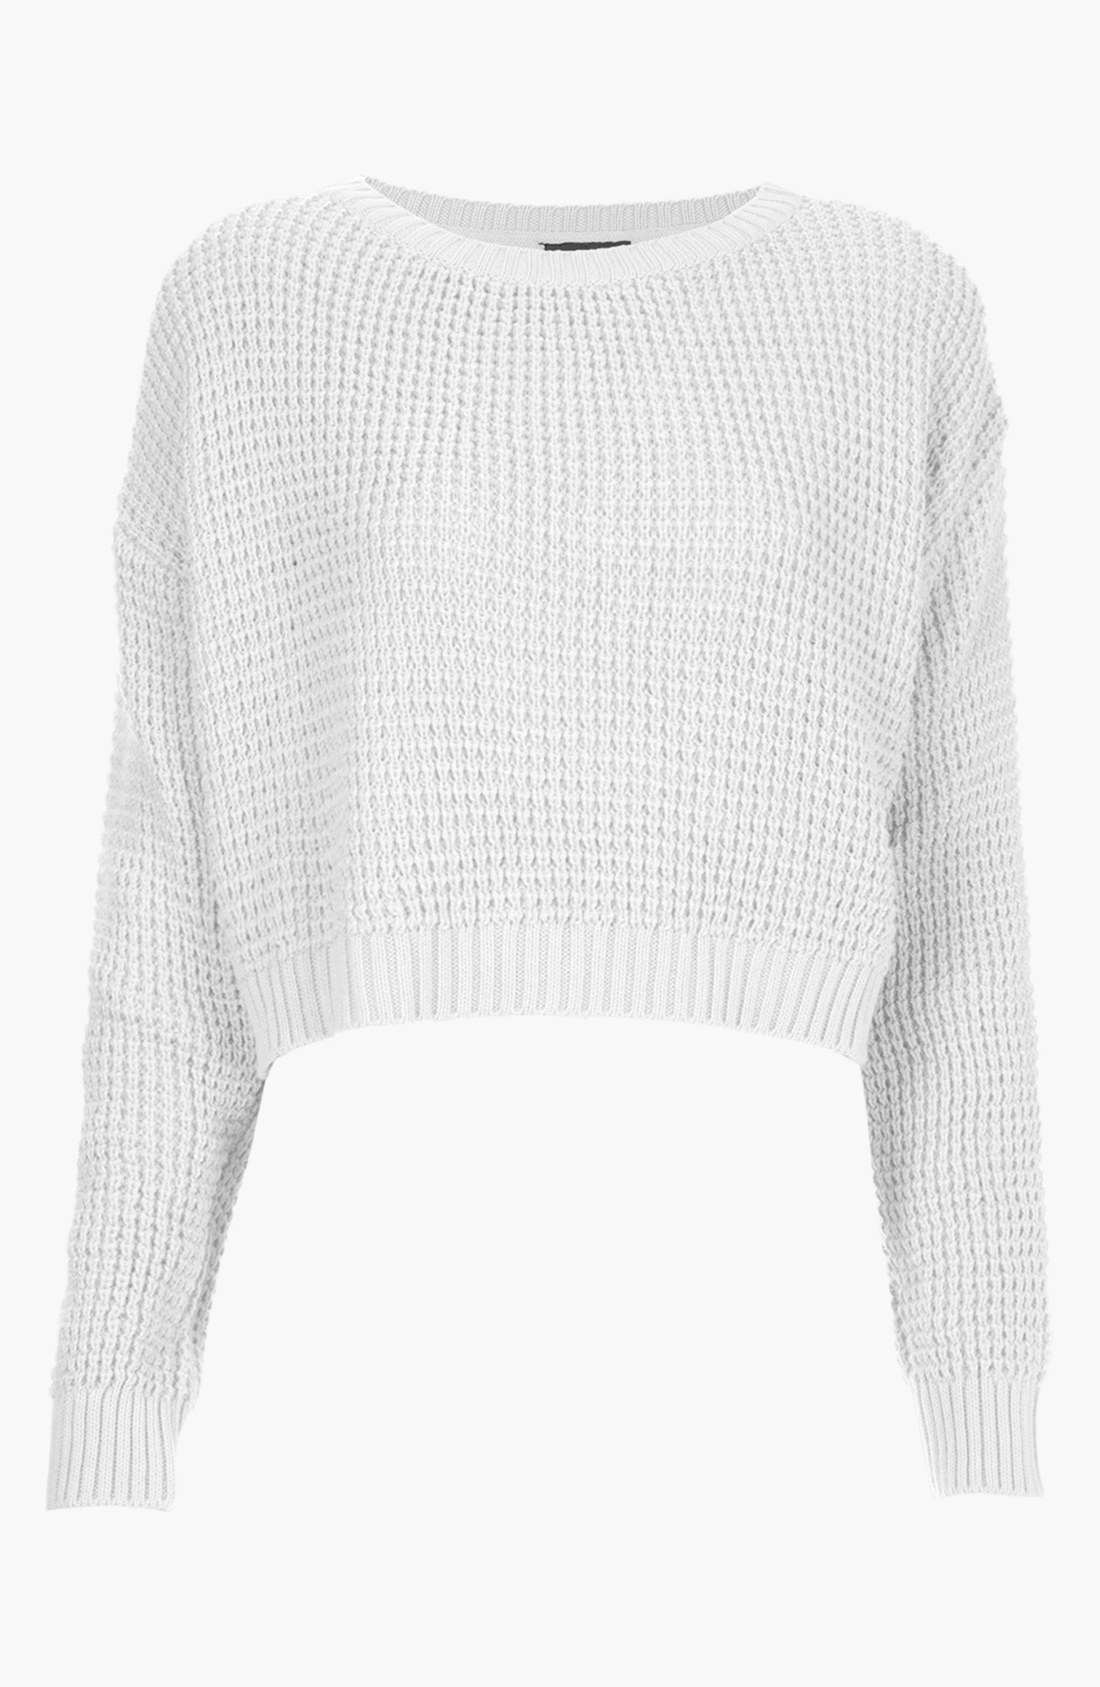 Topshop Knitted Textured Crop Jumper in White | Lyst